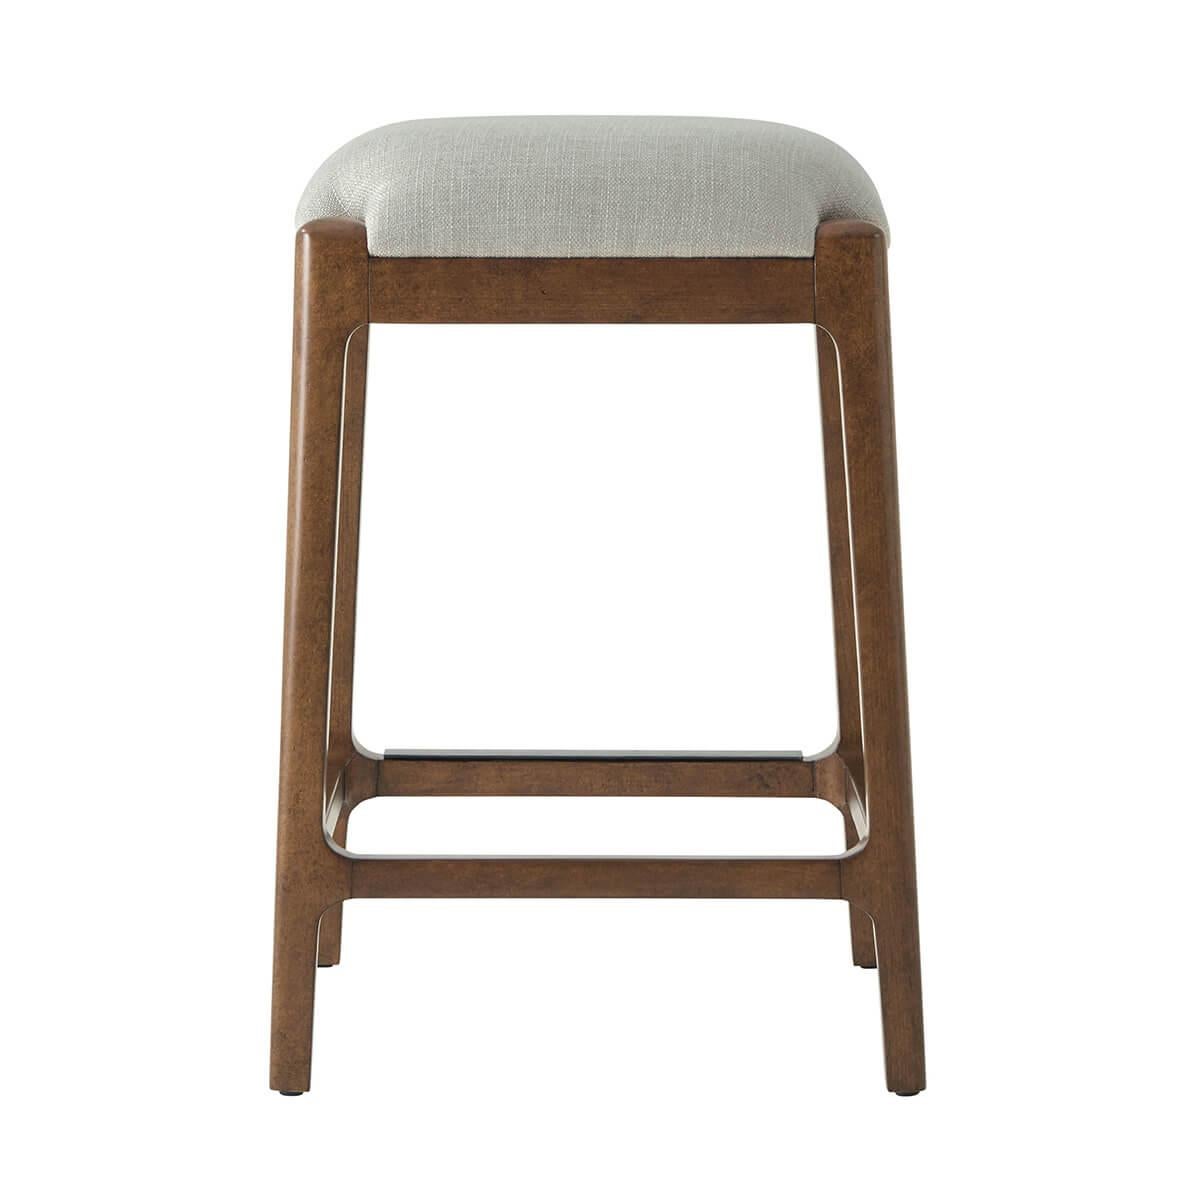 modern rustic bar stools